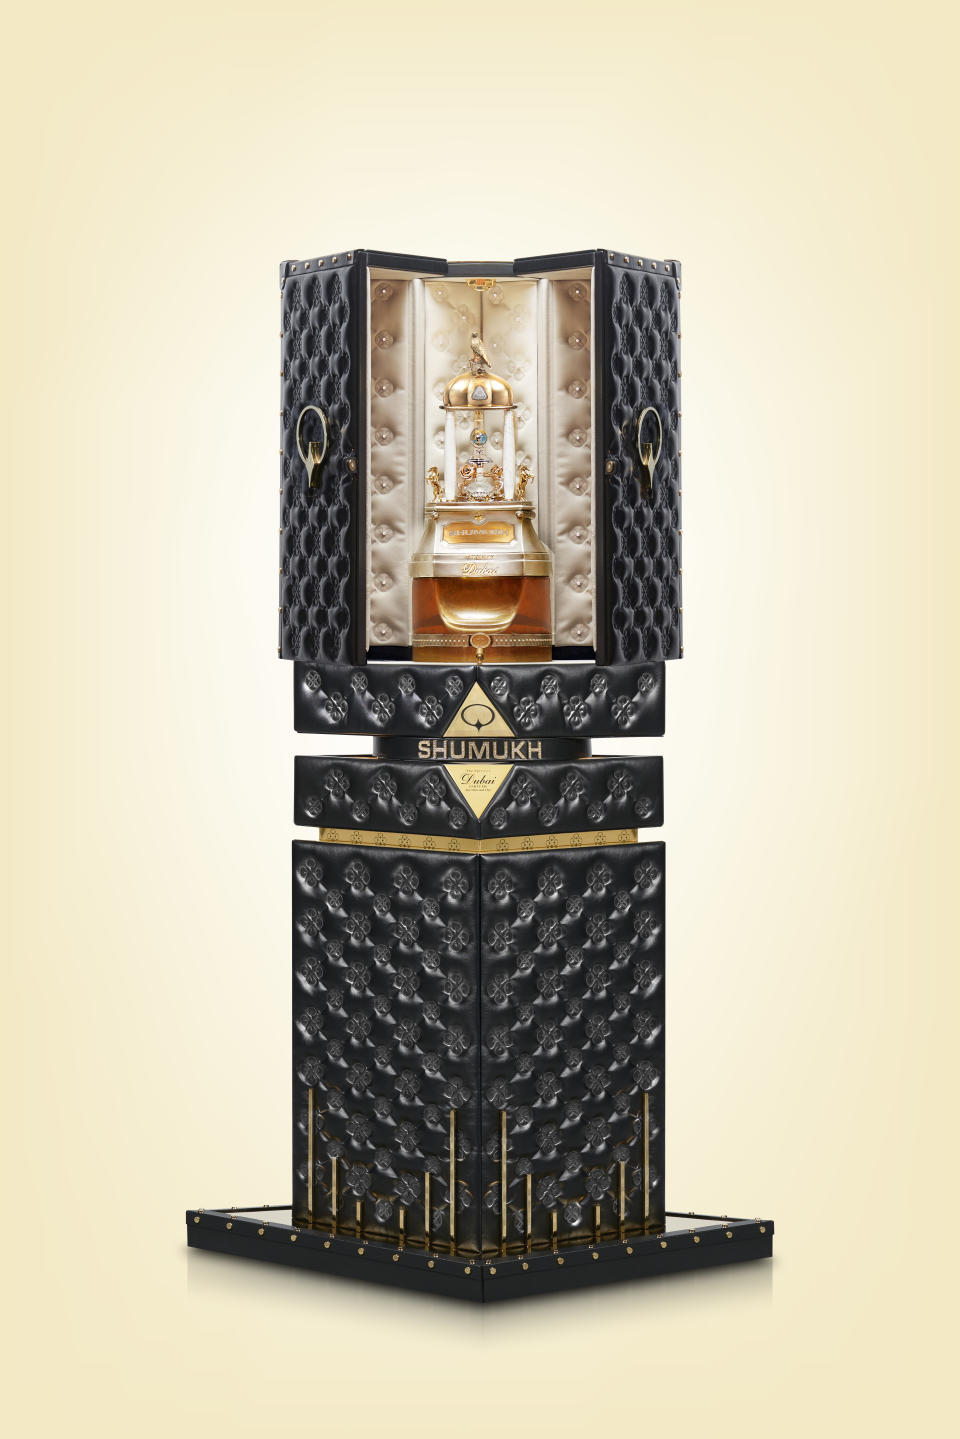 Die massive, 1,9 Meter hohe Verpackung des Parfums Shumukh. - Copyright: The Spirit of Dubai Parfums by Nabeel